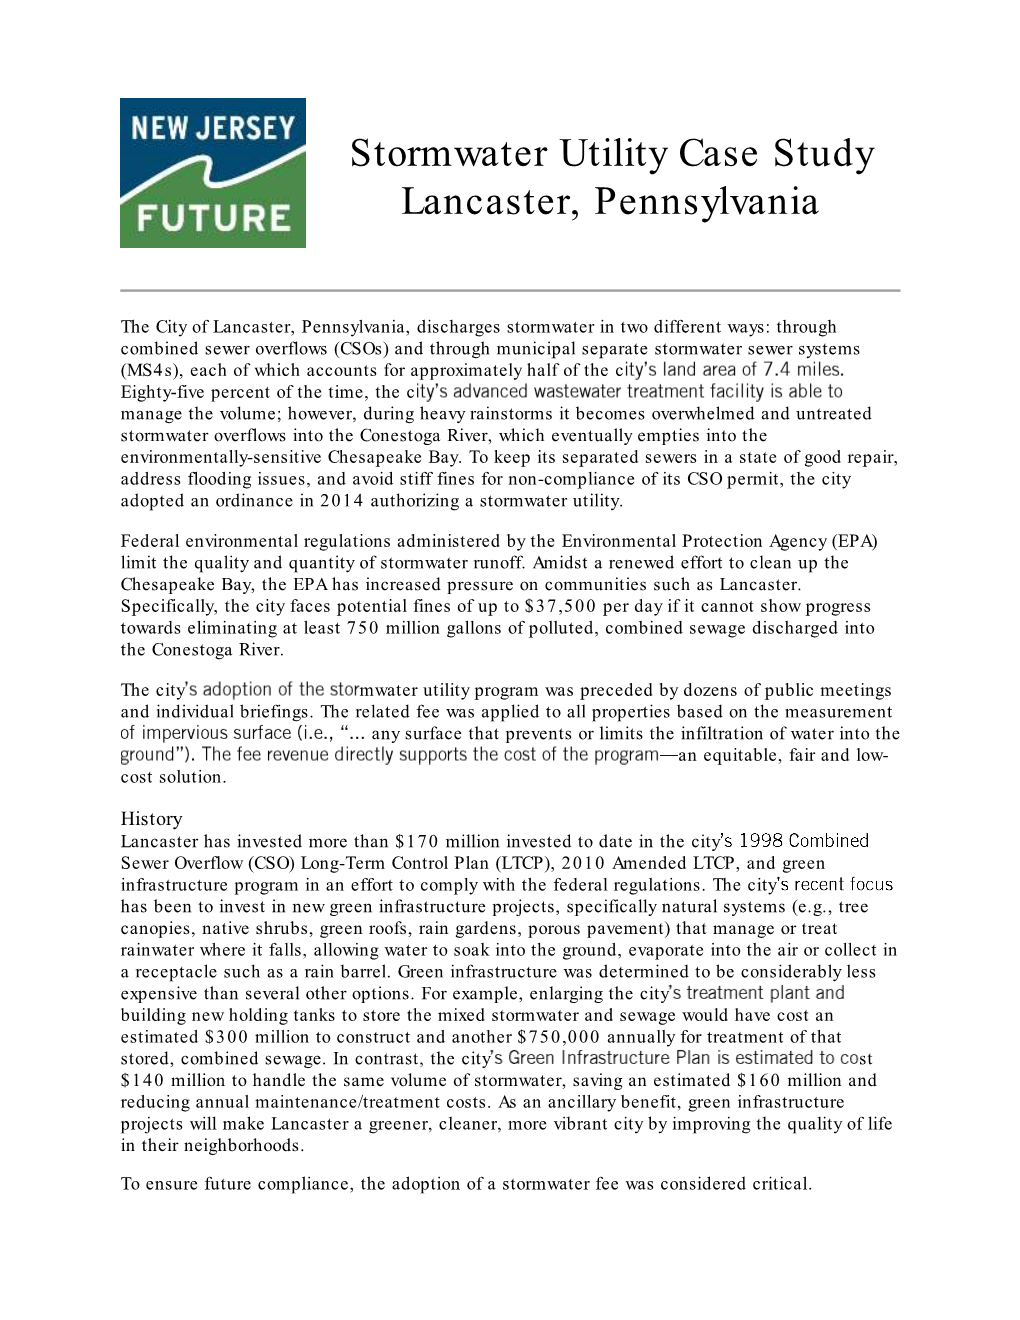 Stormwater Utility Case Study Lancaster, Pennsylvania